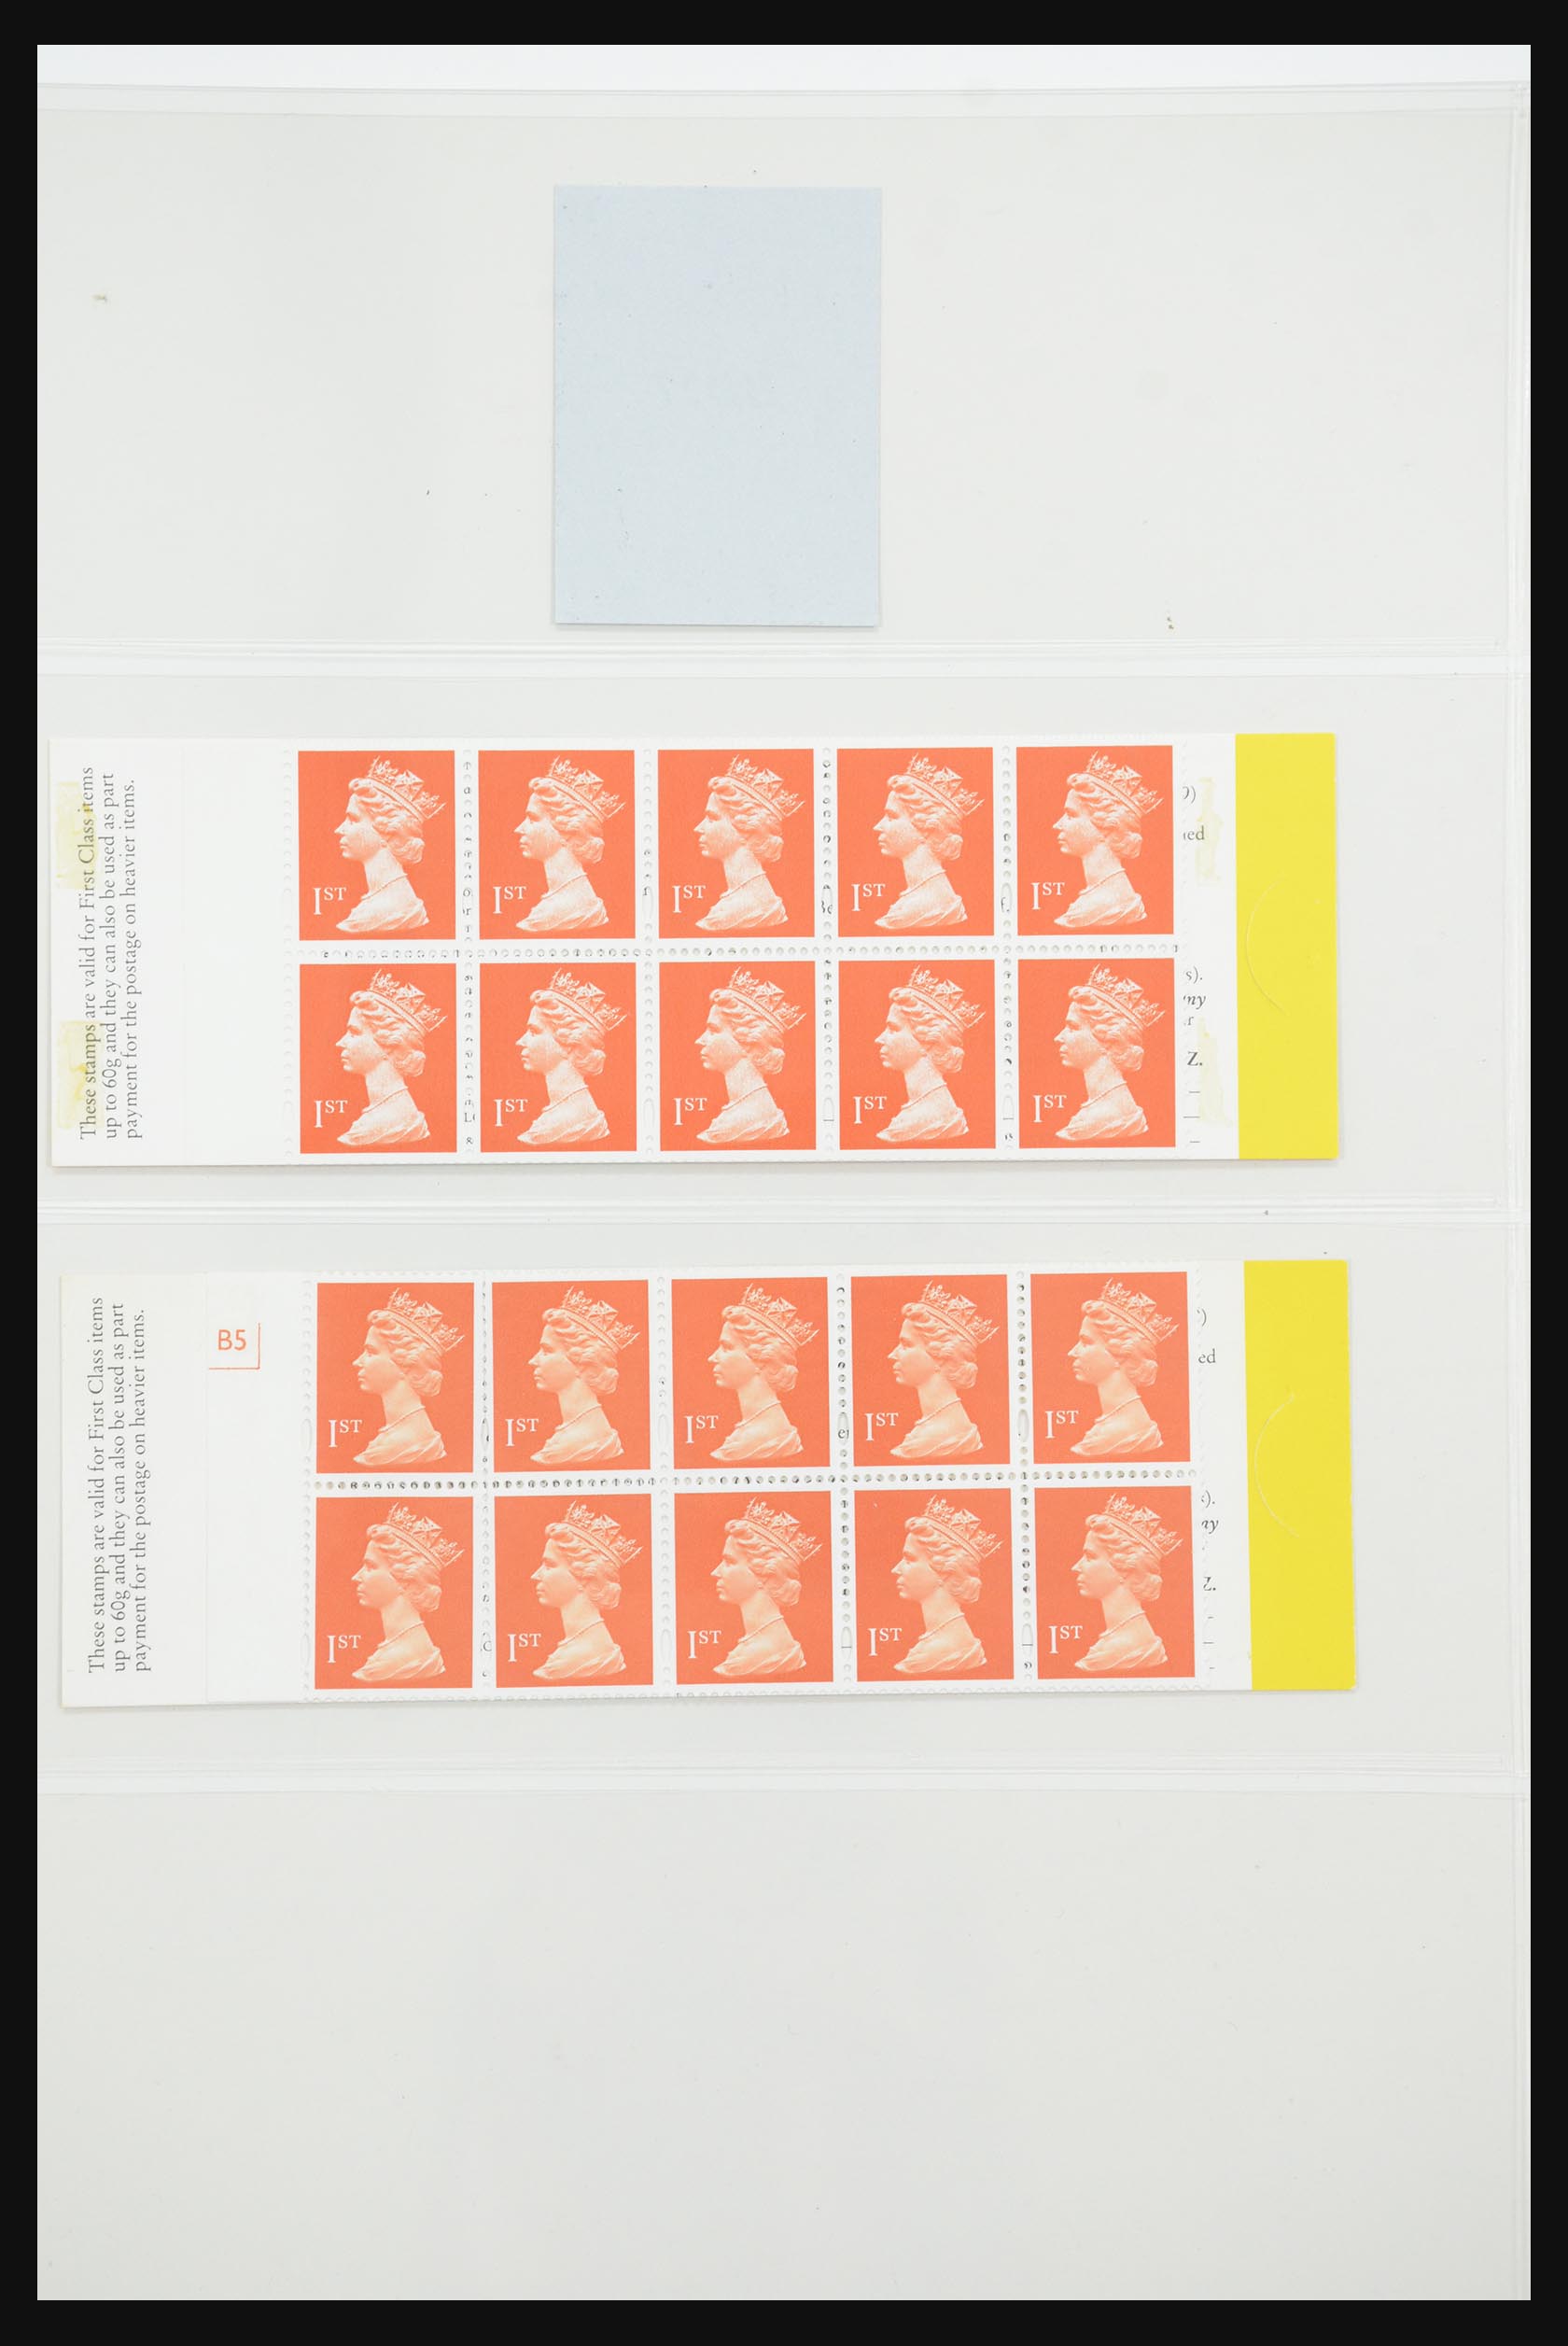 31960 142 - 31960 Great Britain stampbooklets 1989-2000.